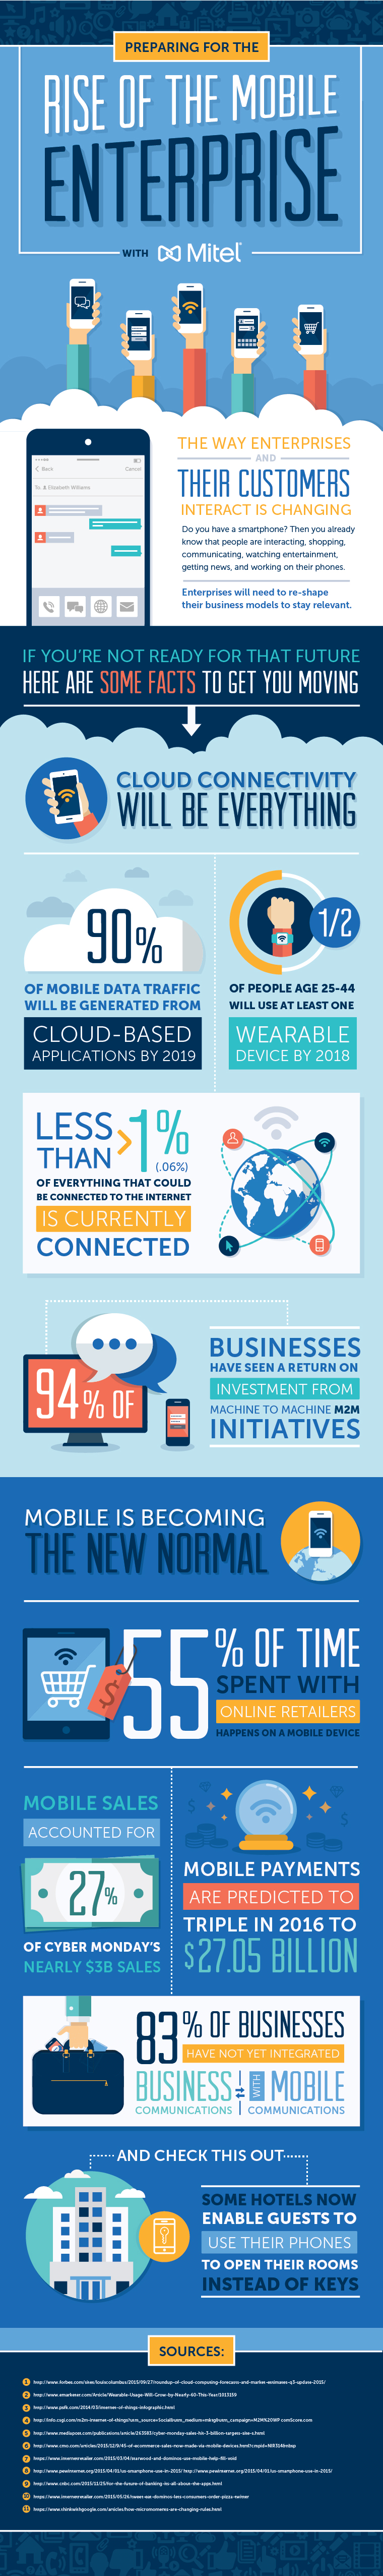 Mitel-Infographic-Rise-of-Mobile-Enterprise-760px